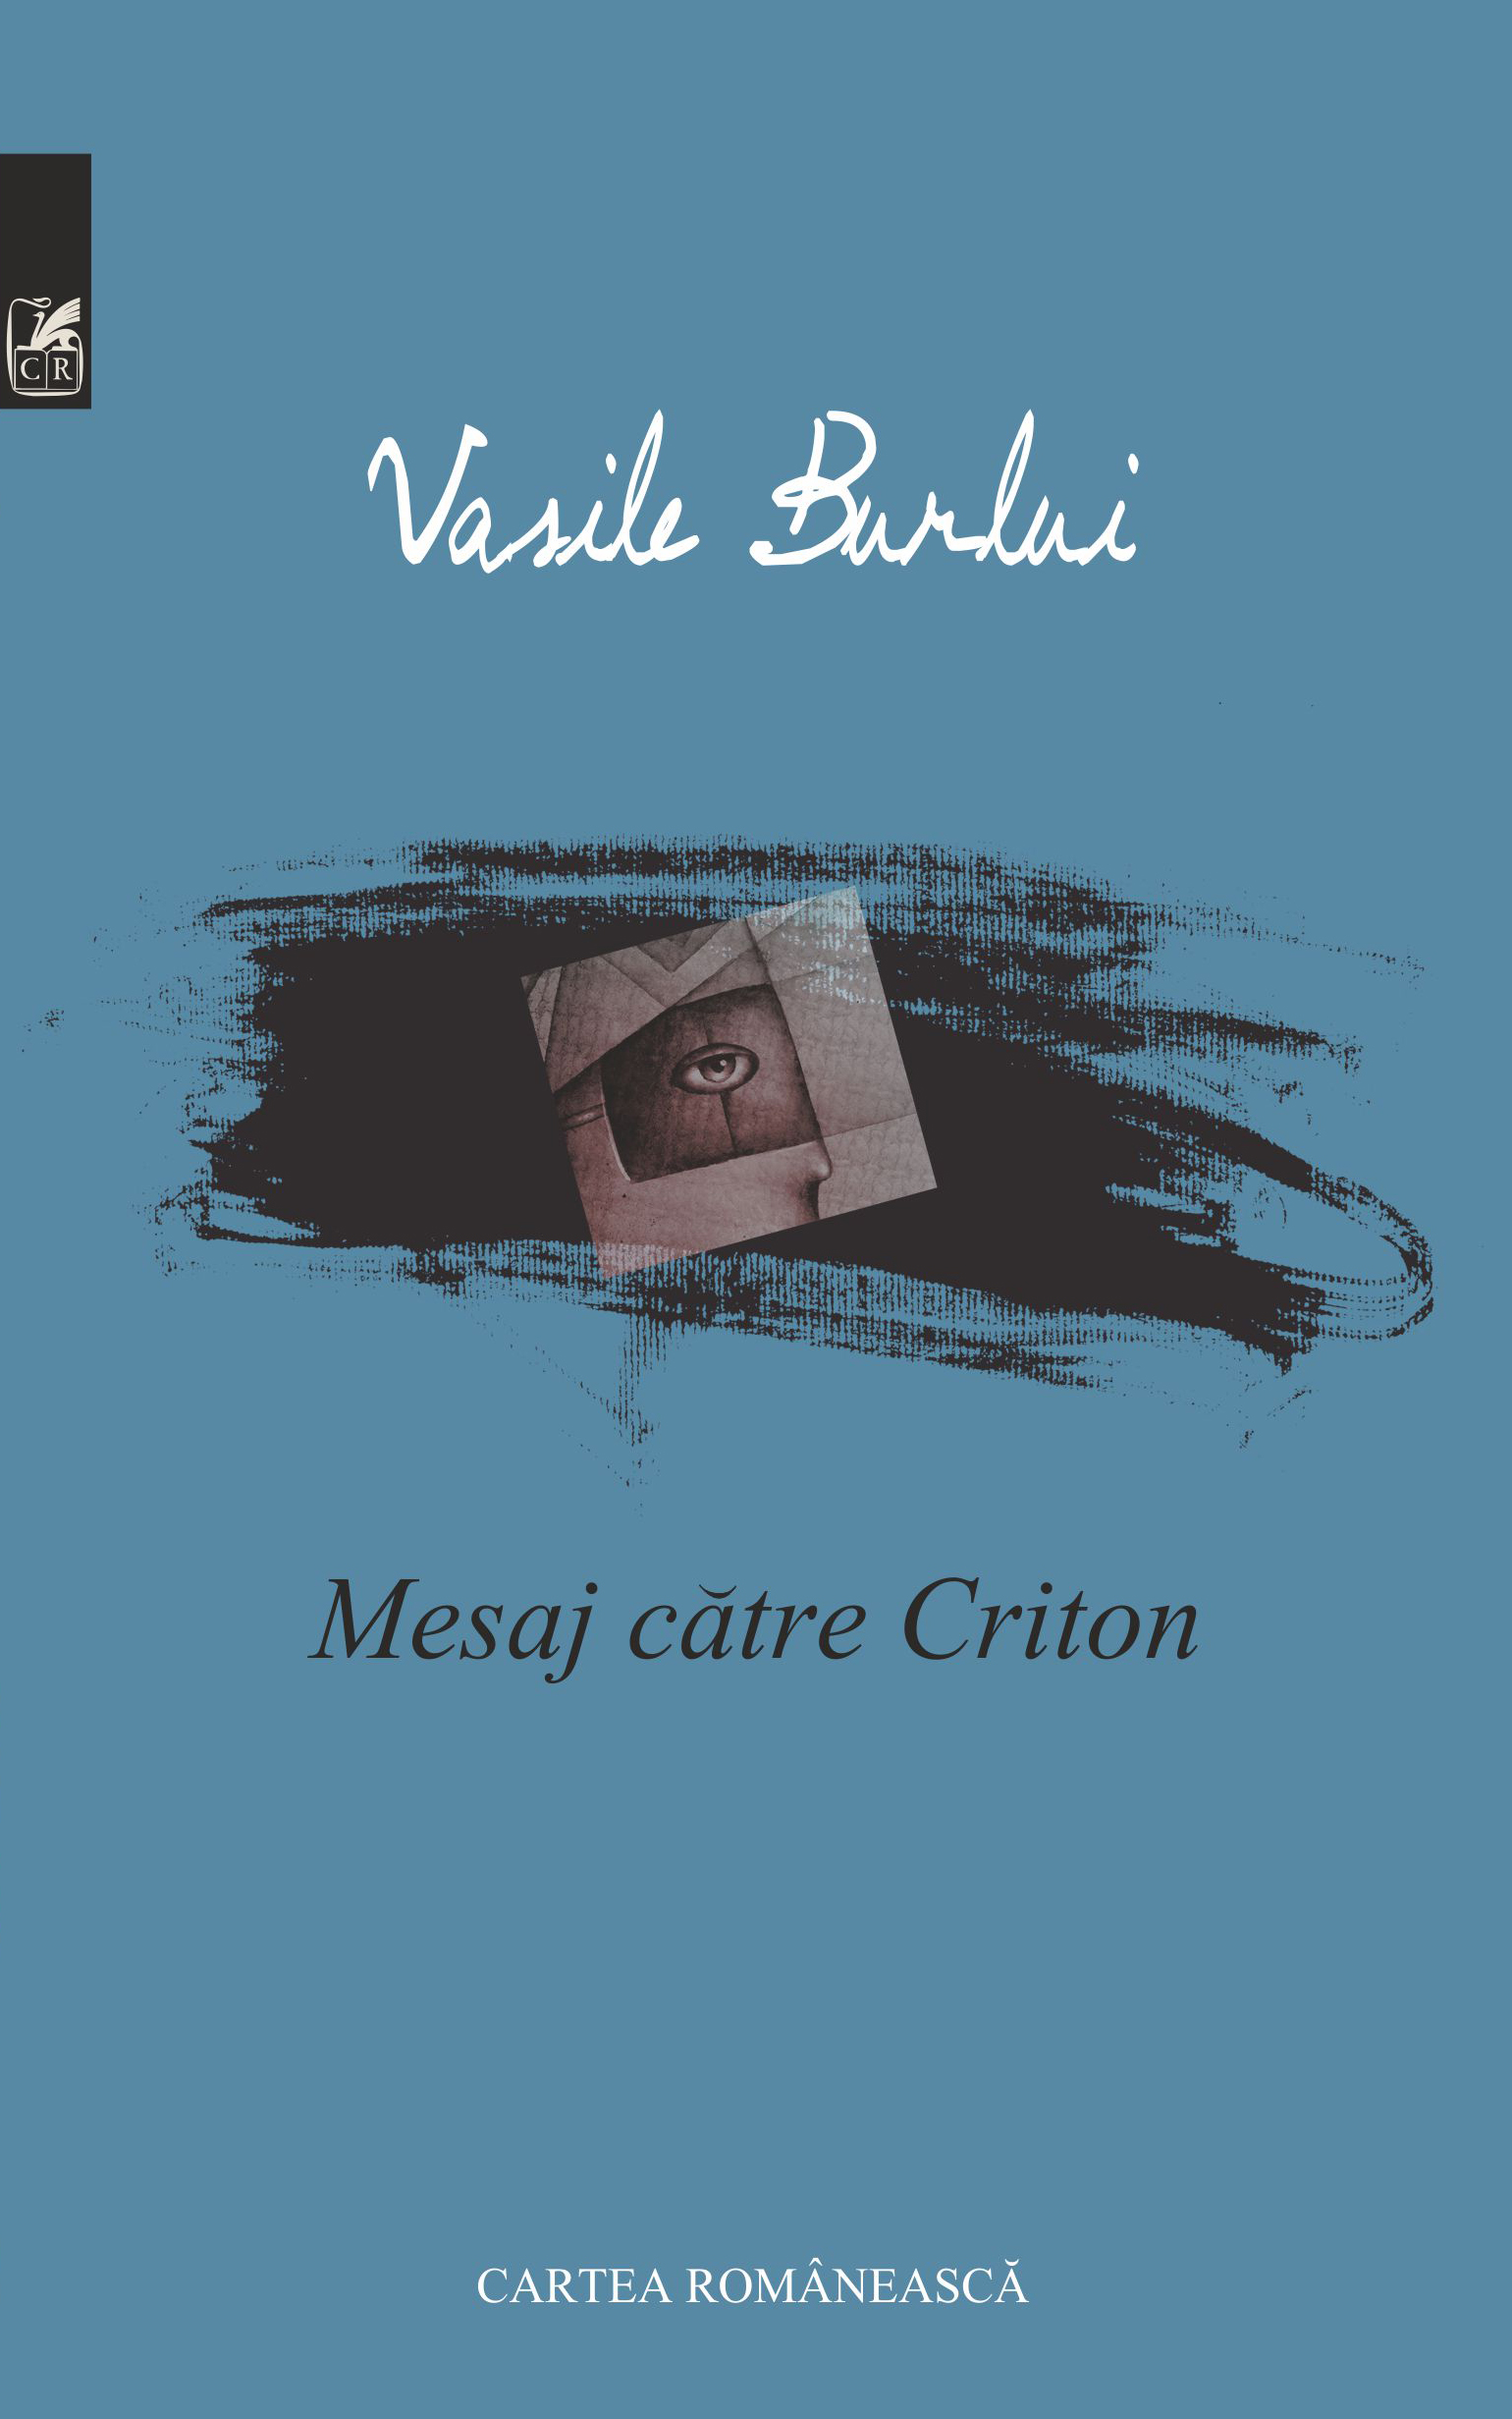 Mesaj catre Criton - Vasile Burlui